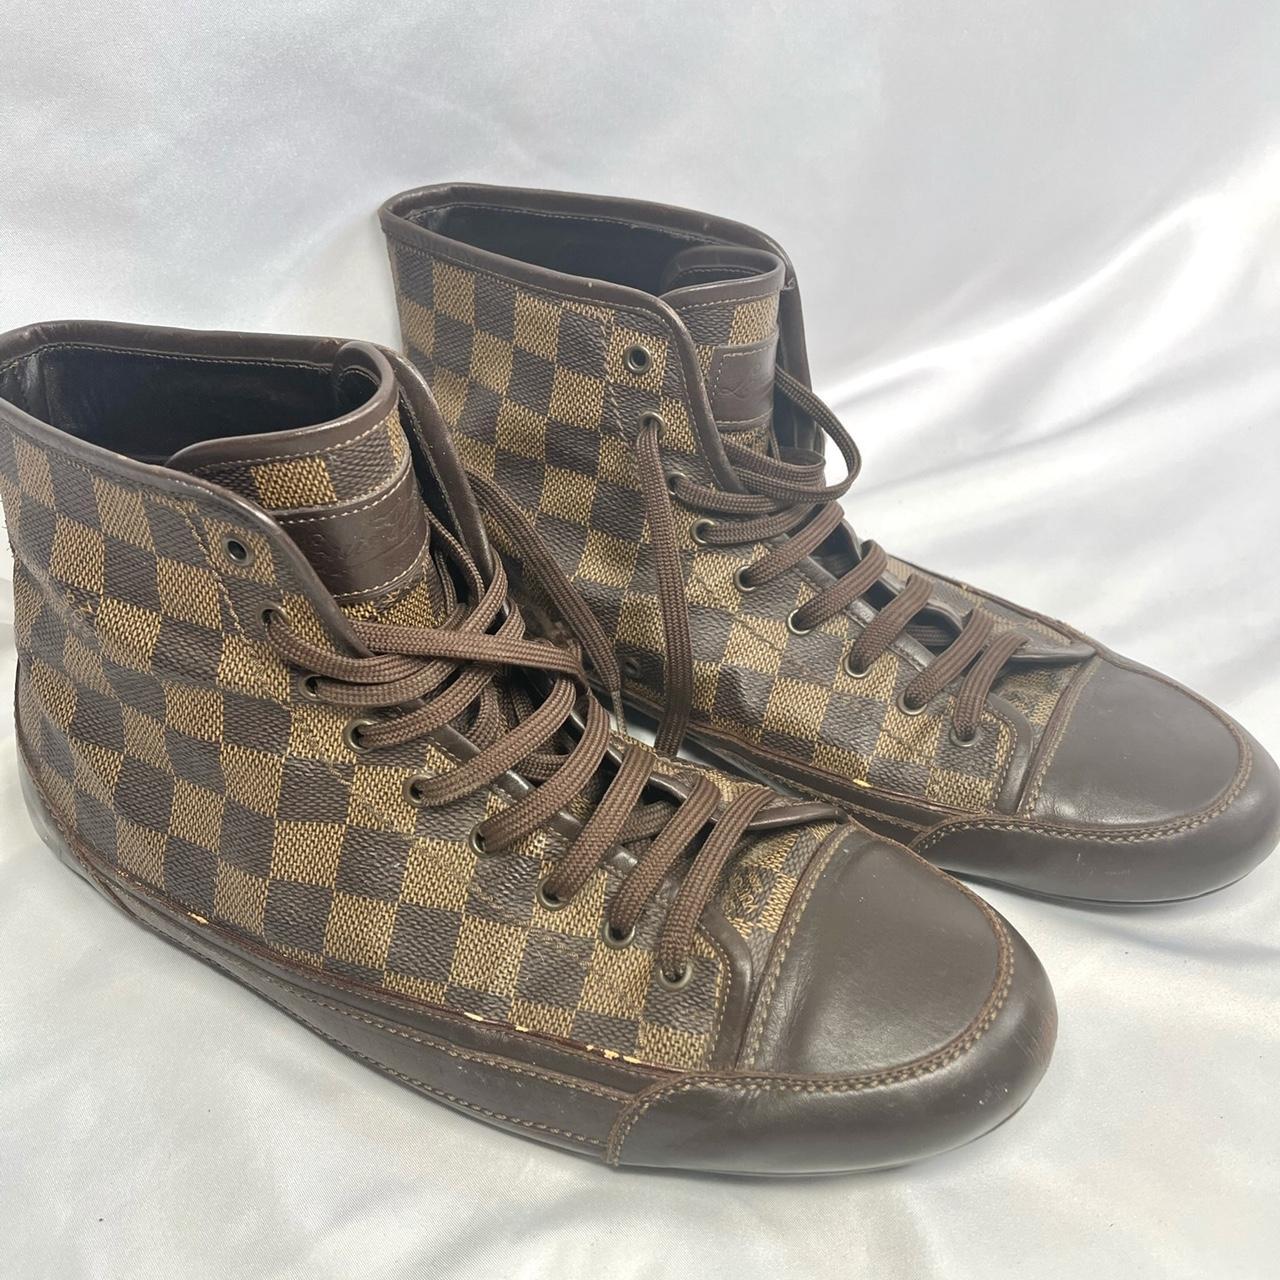 These vintage Louis Vuitton tennis shoes/sneakers - Depop